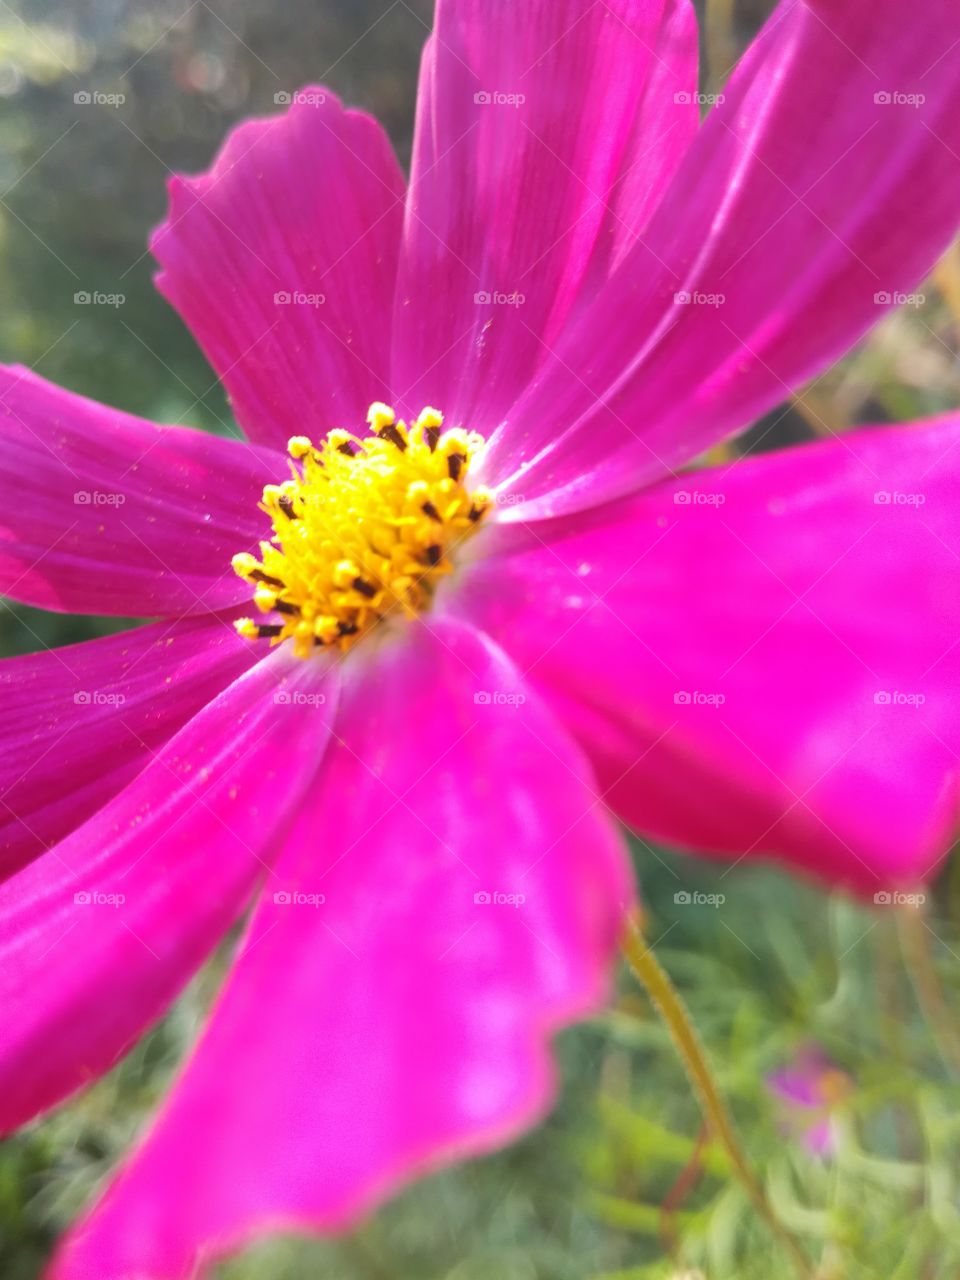 Flower in pink color 6